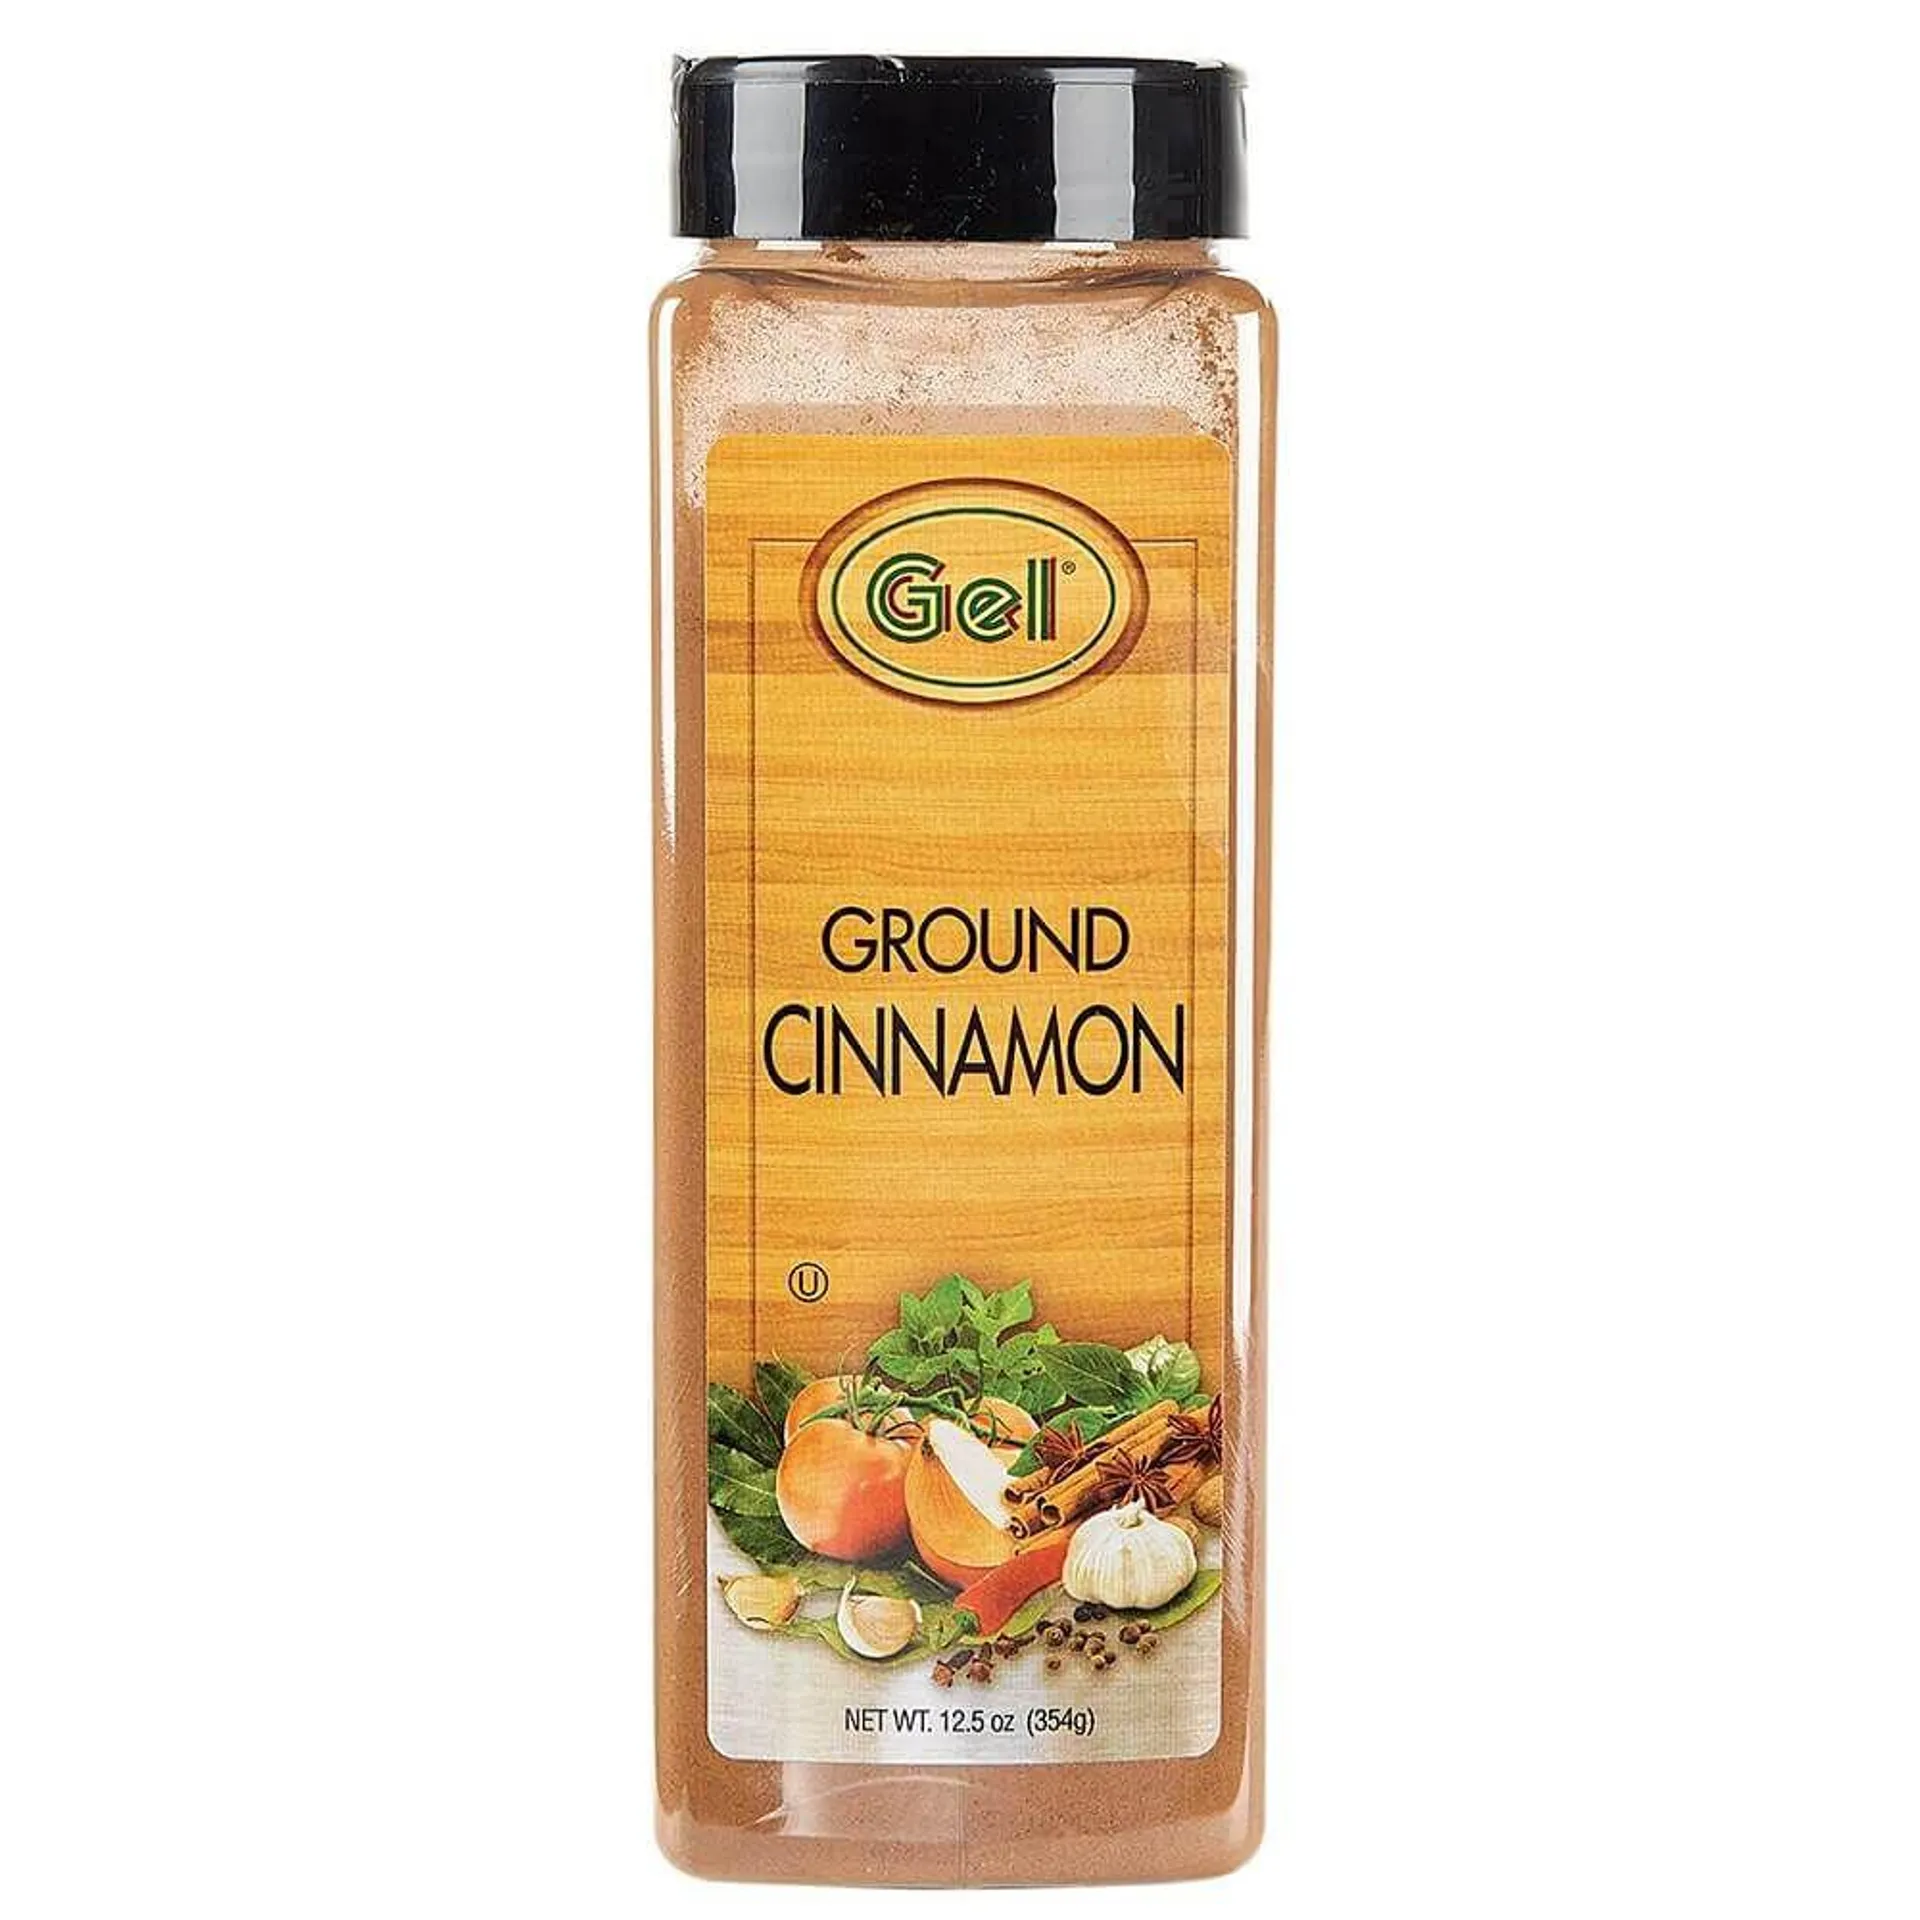 Gel Ground Cinnamon, 12.5 oz